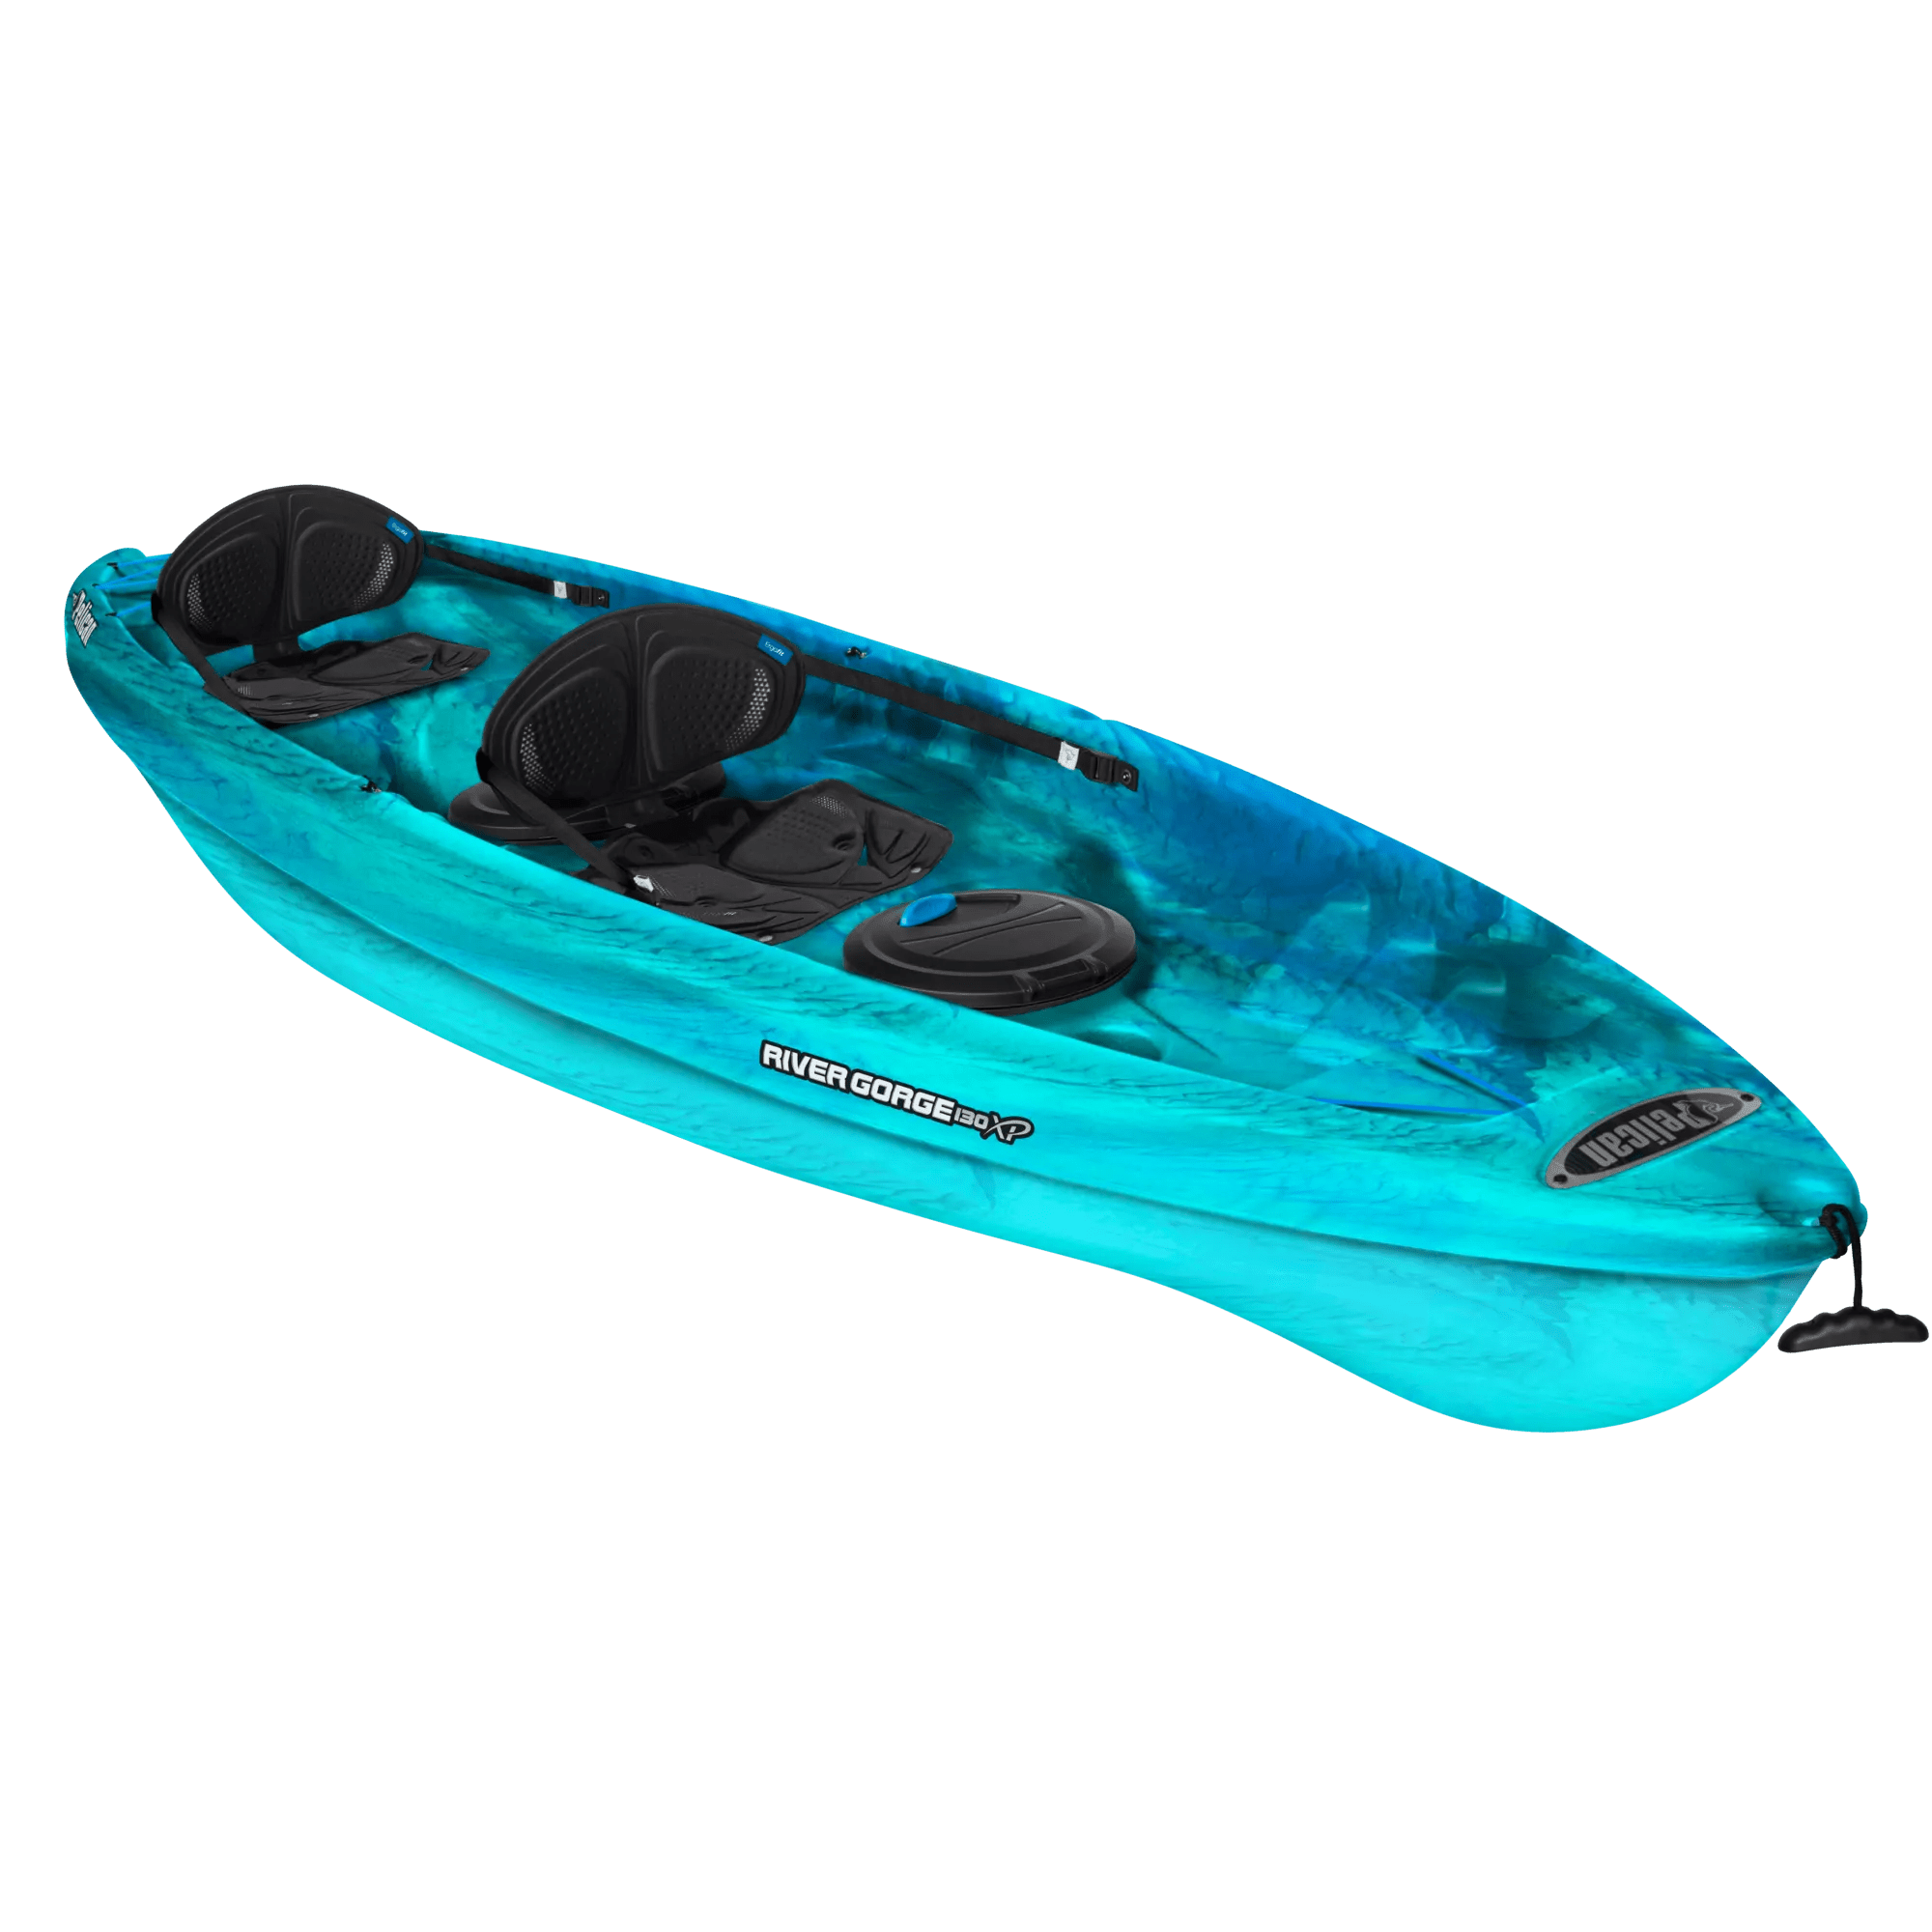 PELICAN - Kayak tandem récréatif River Gorge 130XP - Aqua - KUF13P200-00 - ISO 